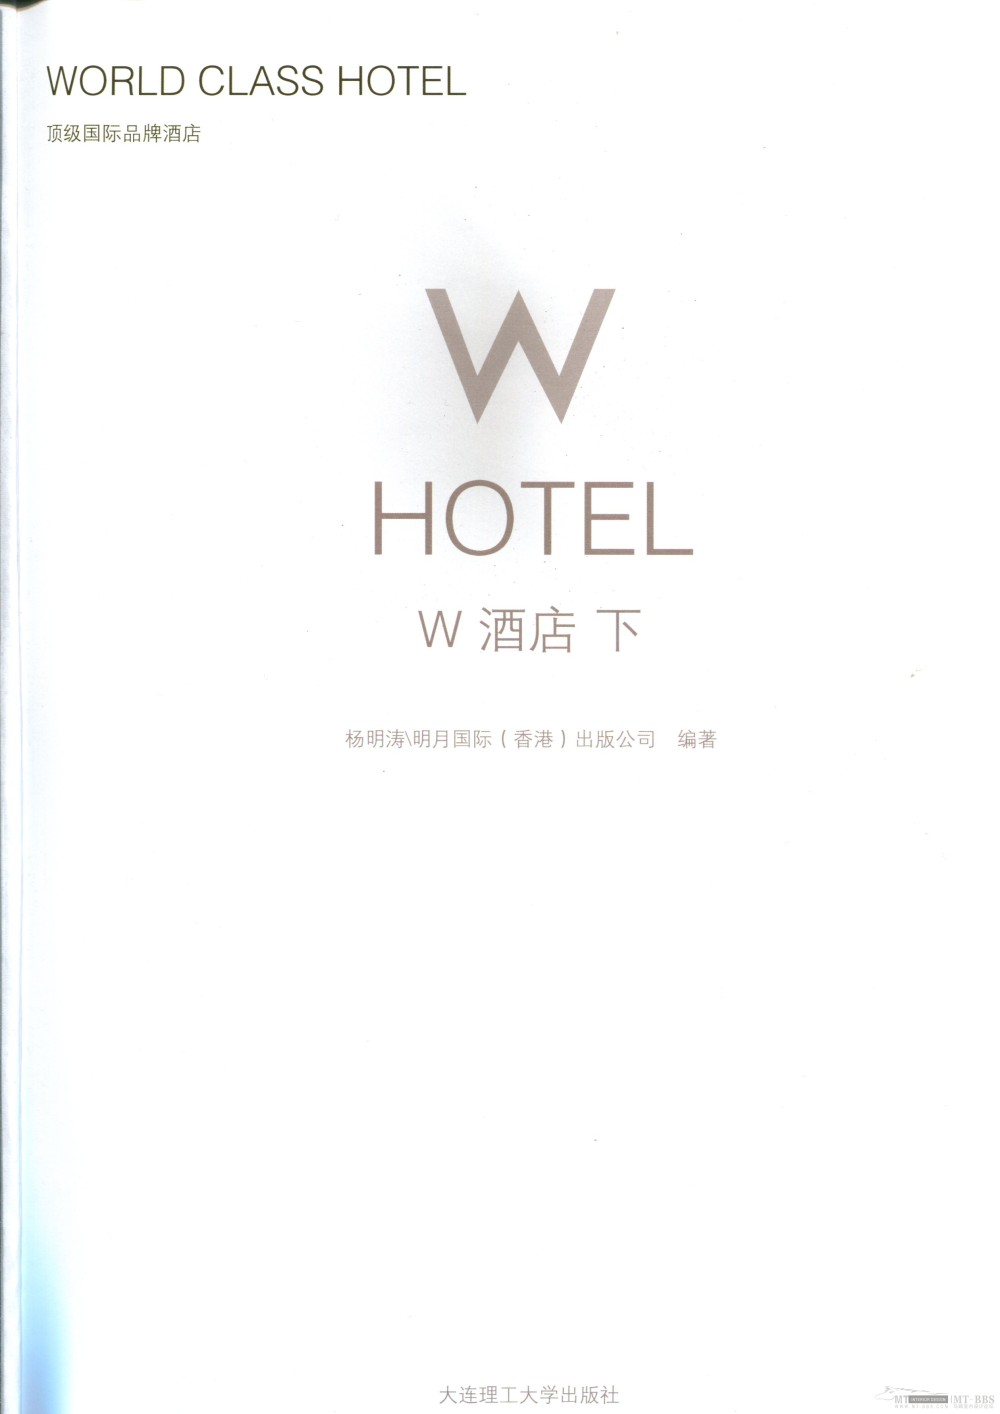 WORLD CLASS HOTEL W酒店（下）_img313.jpg